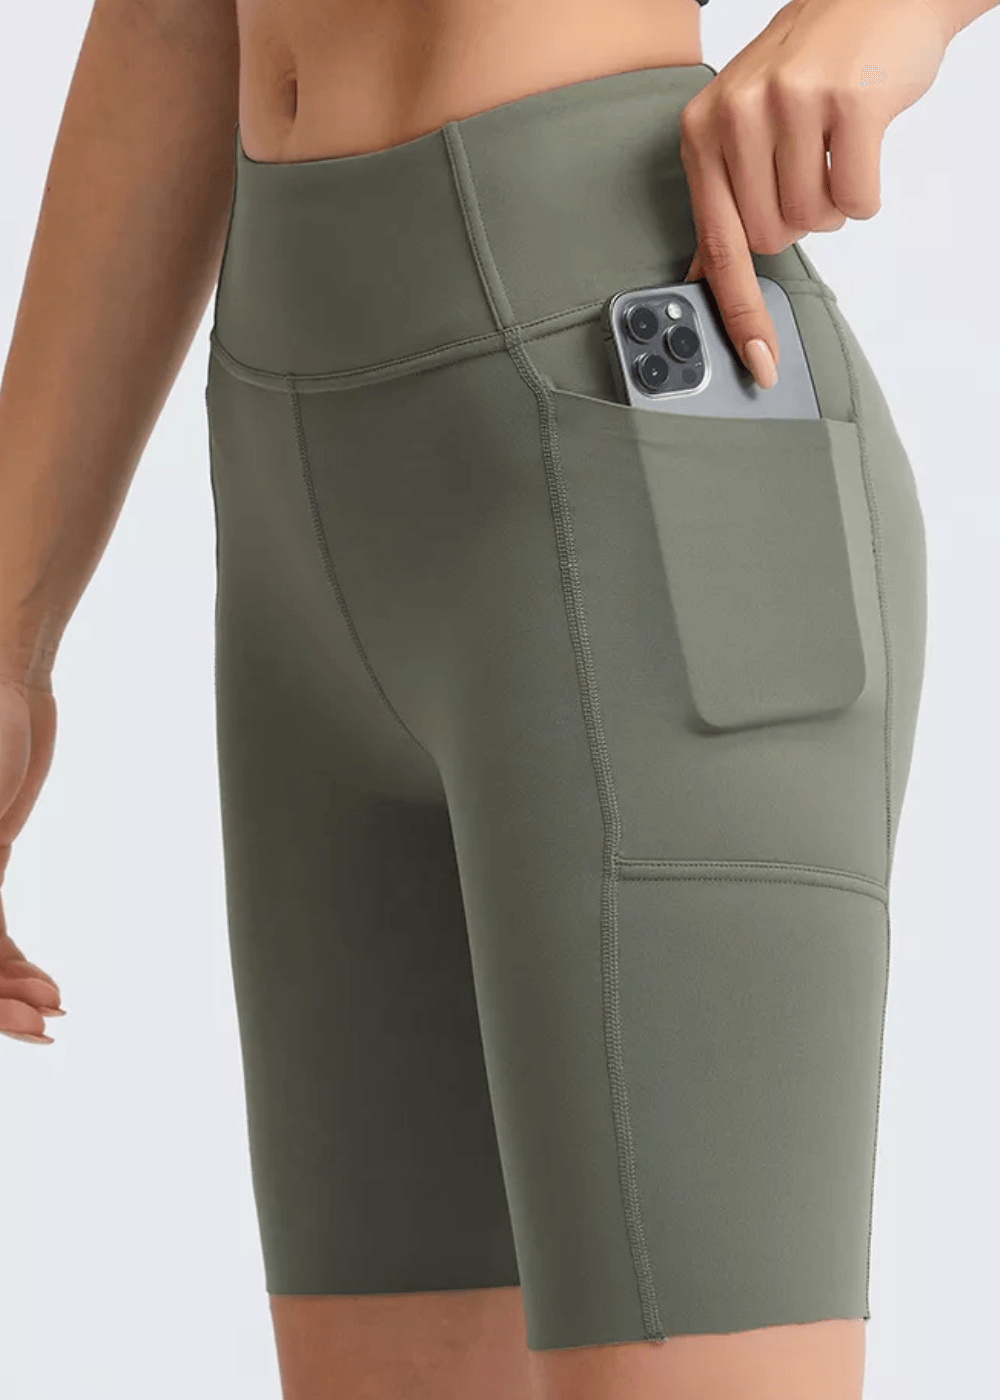 Midrise 8 inch  Pocket shorts